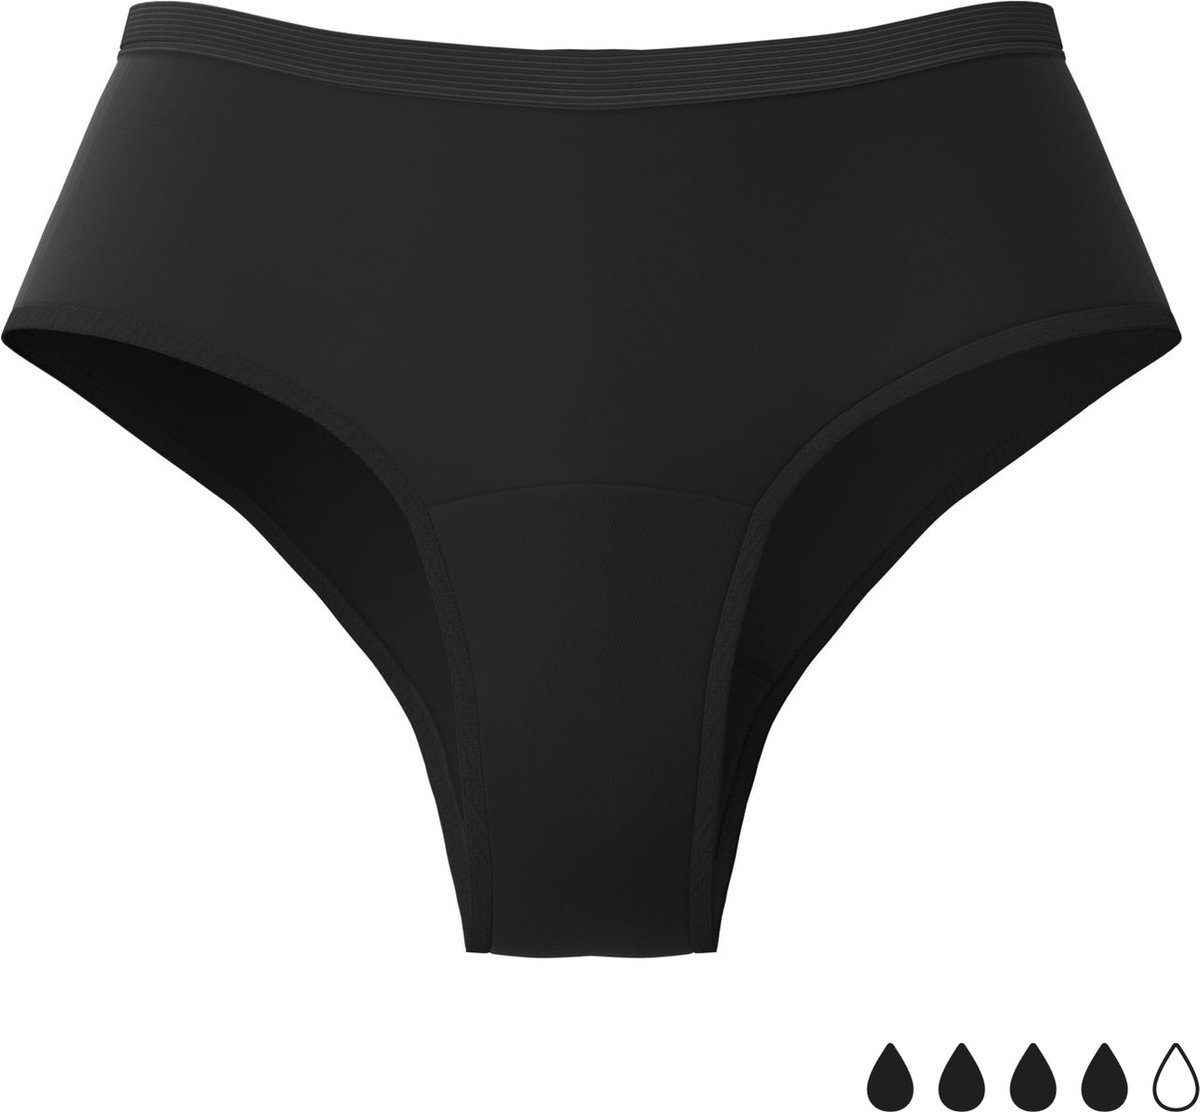 Weekiss Boyshort - Menstruatie Ondergoed, period underwear, period panties, L (40), zwart